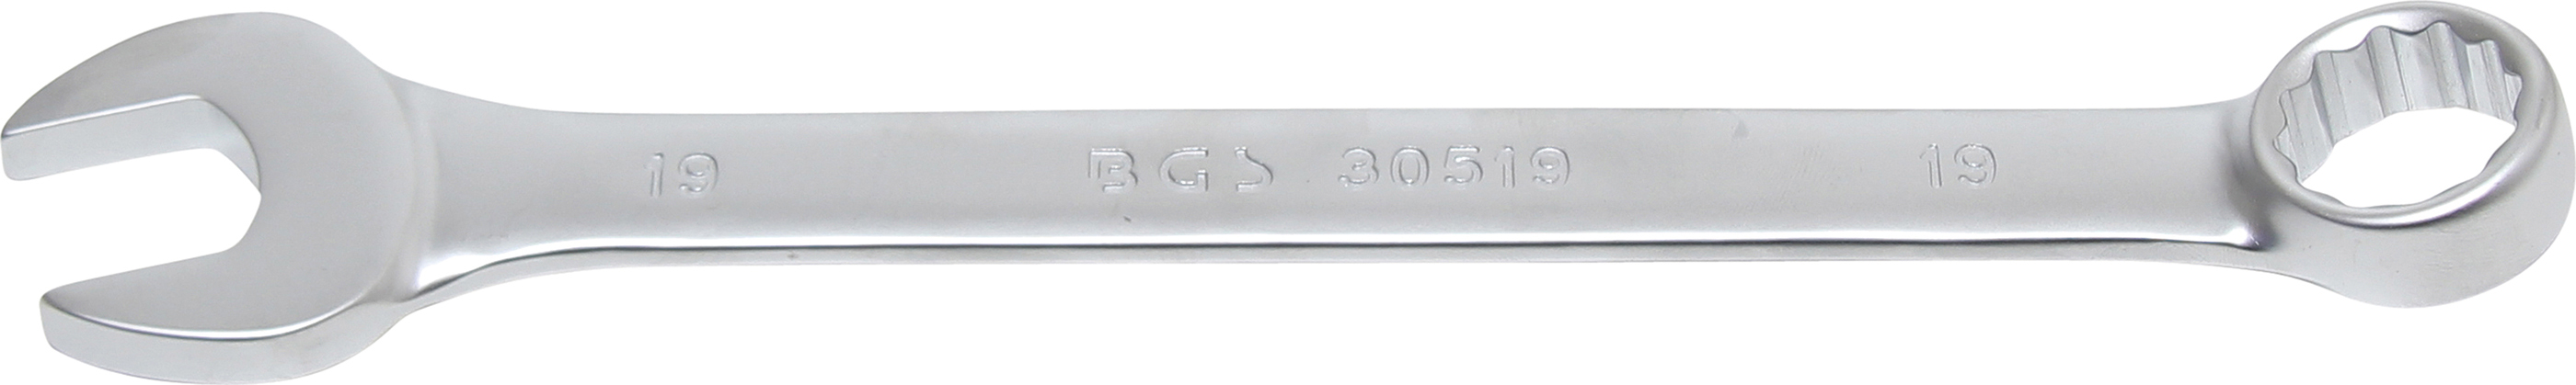 19 mm BGS 30519 Maul-Ringschlüssel 